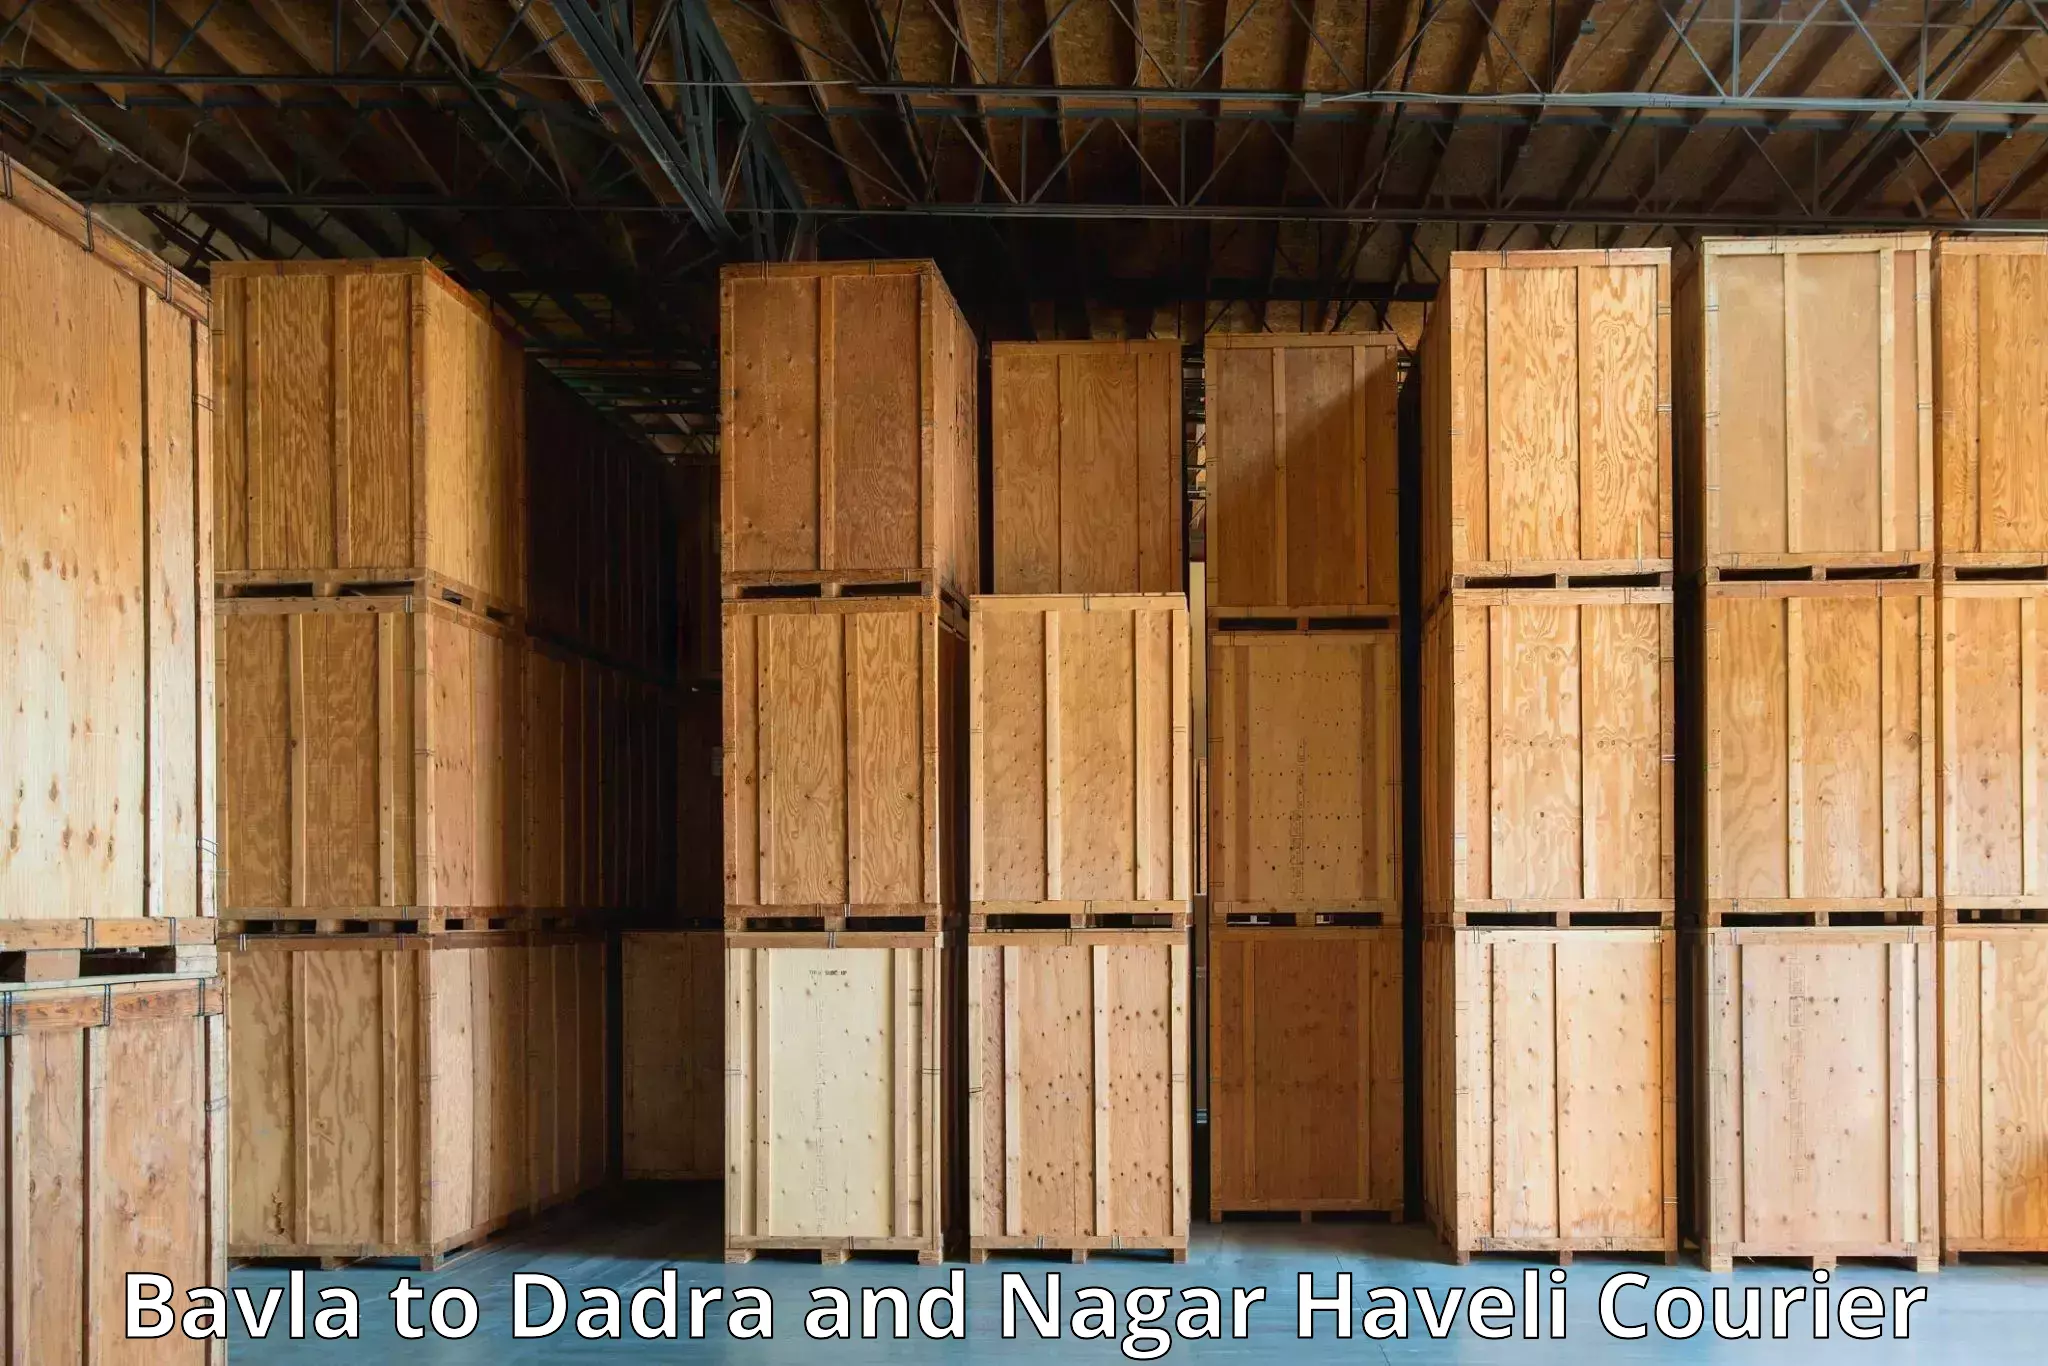 High-performance logistics Bavla to Dadra and Nagar Haveli